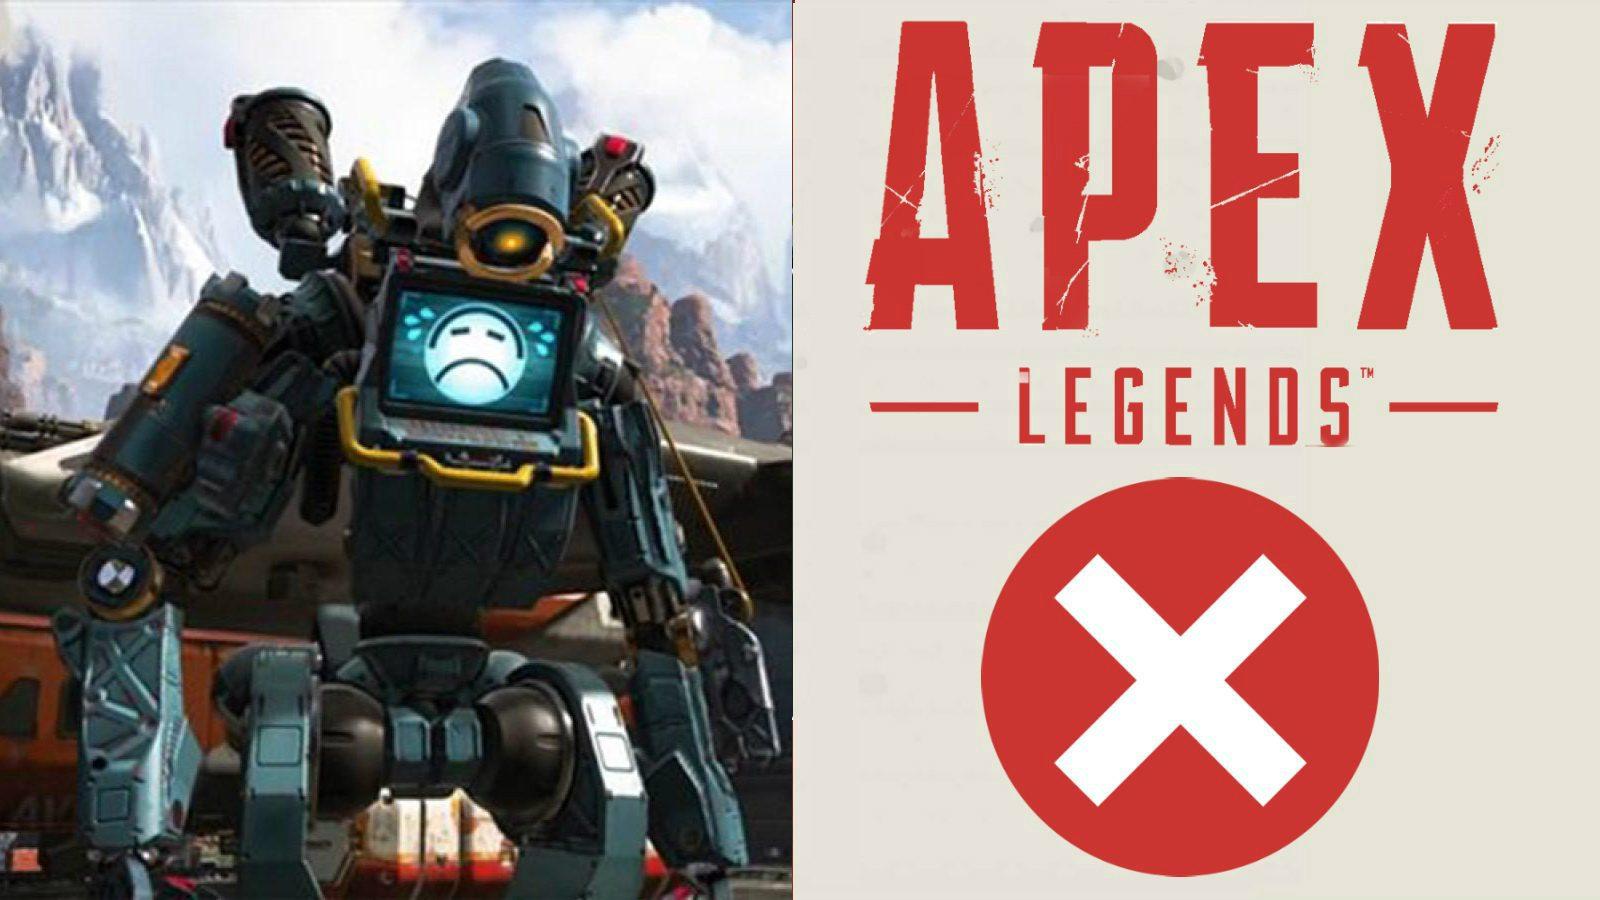 Apex legends servers